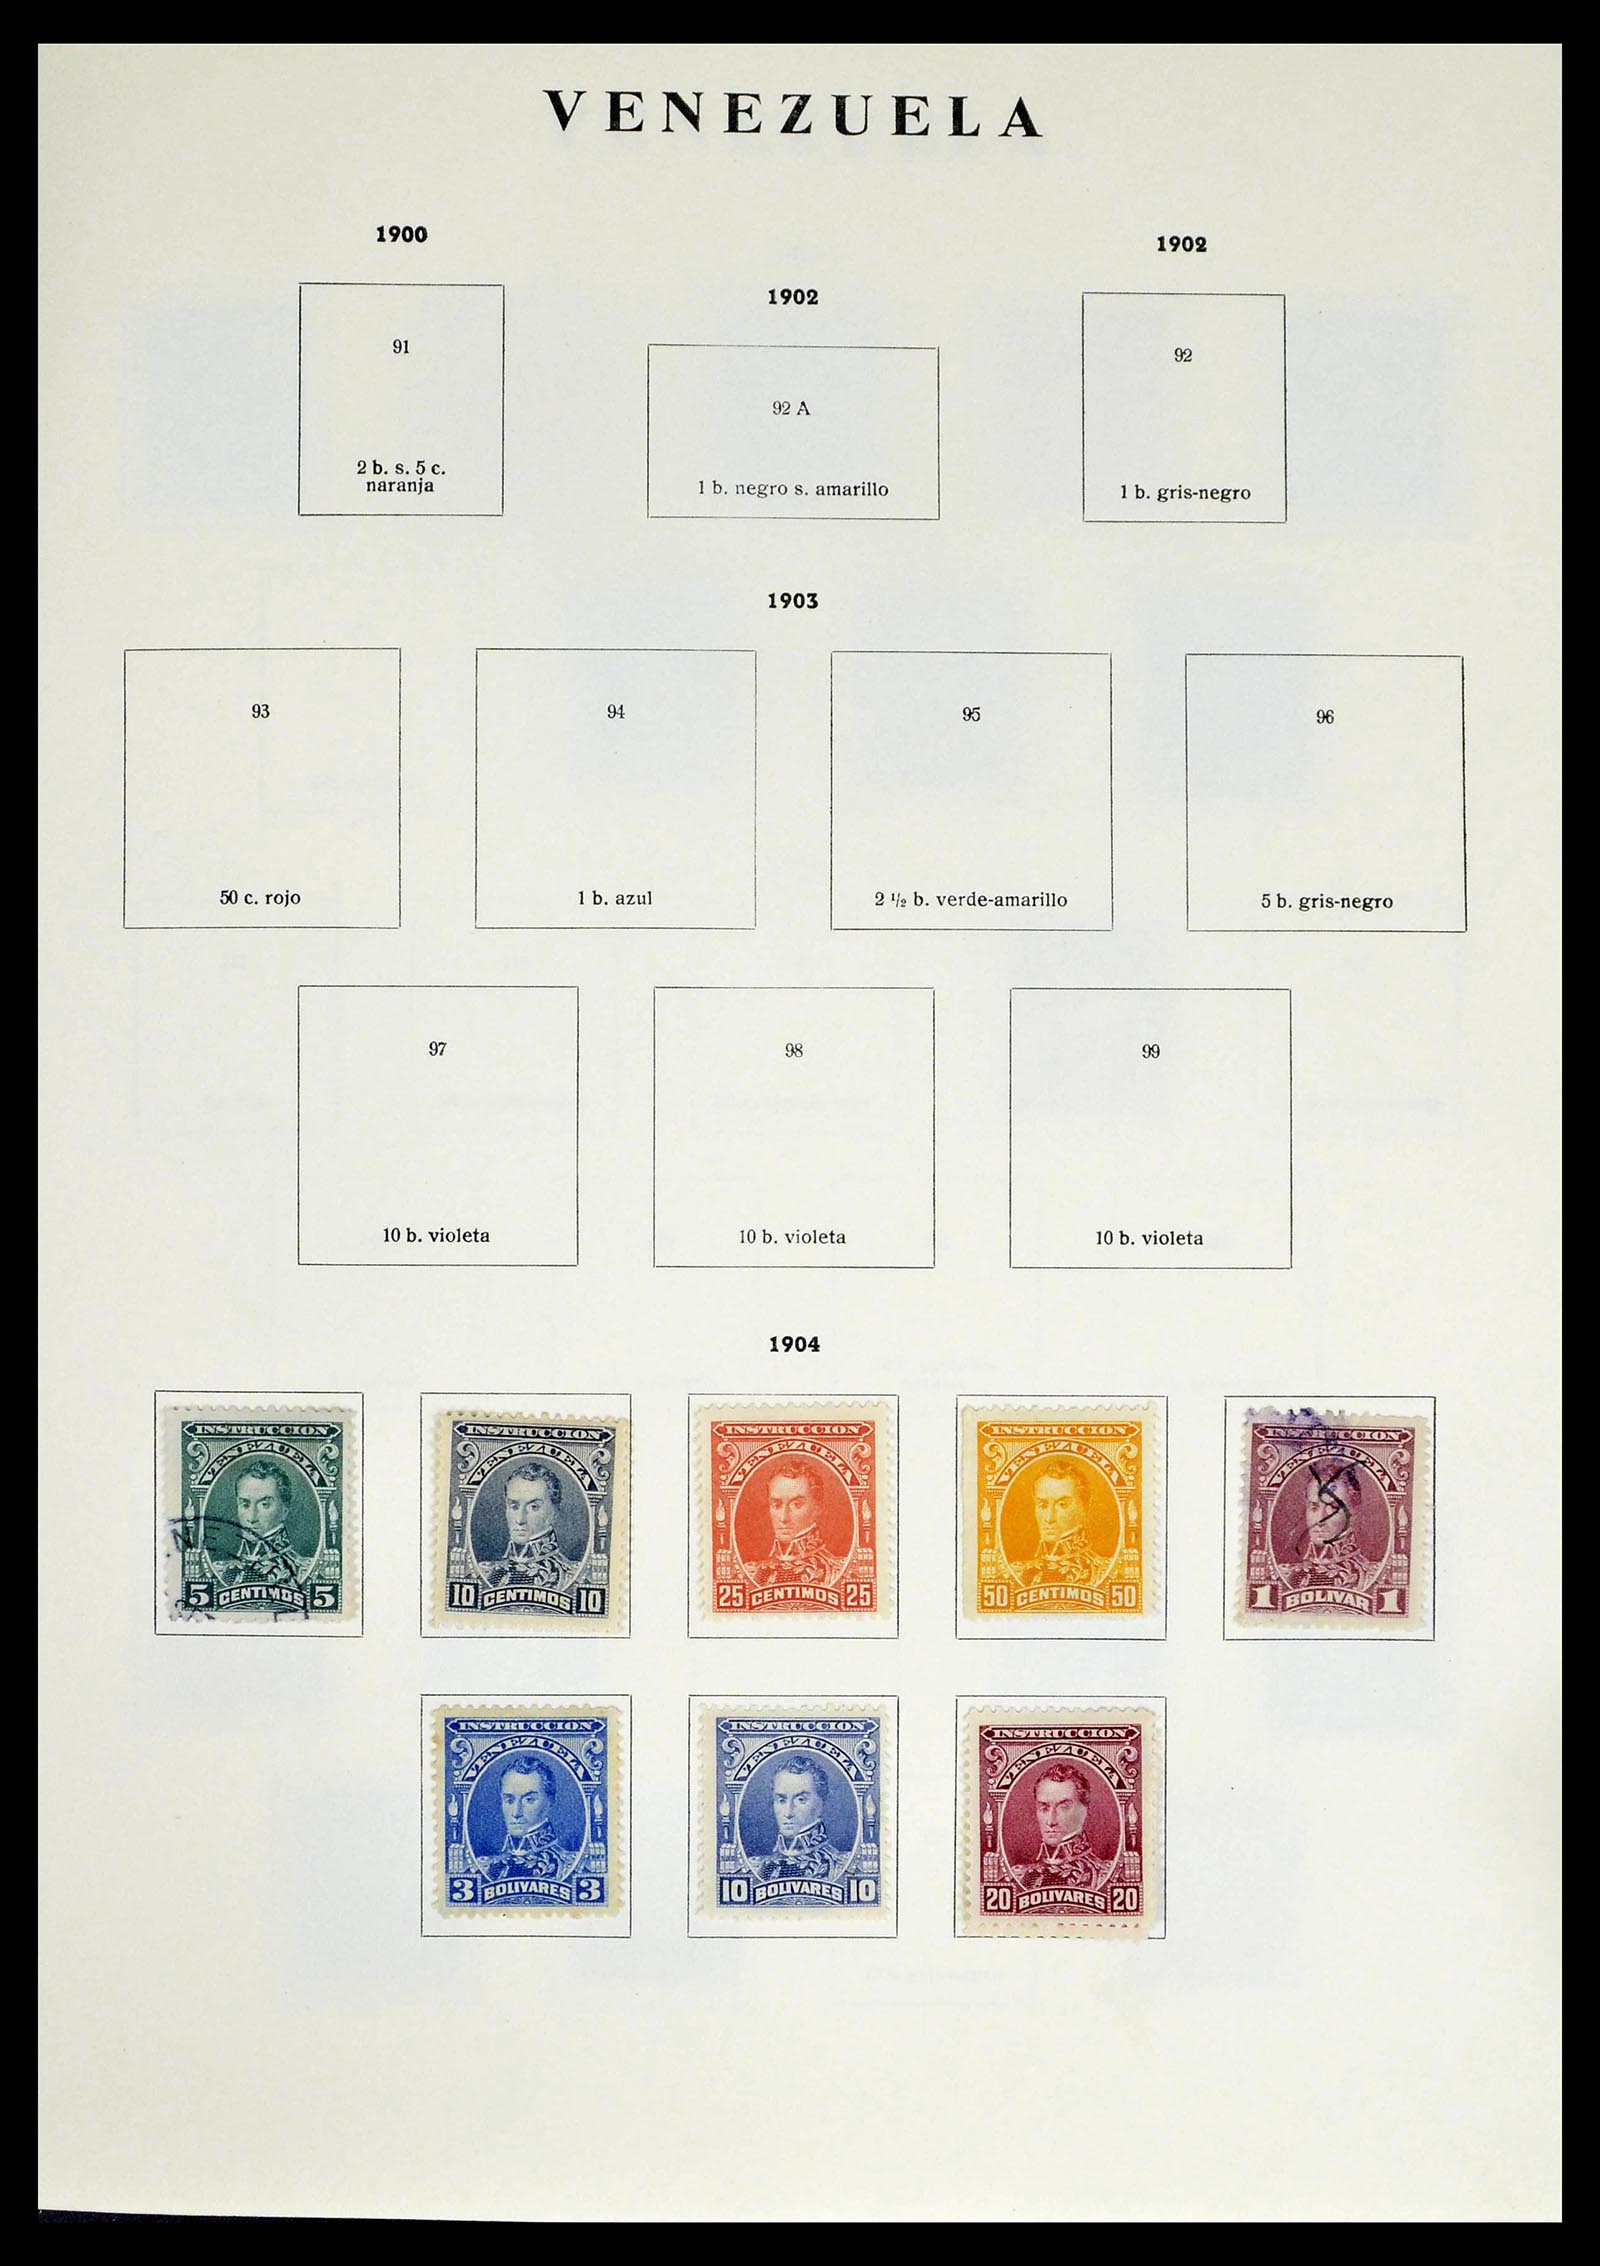 39223 0213 - Stamp collection 39223 Venezuela 1859-1984.